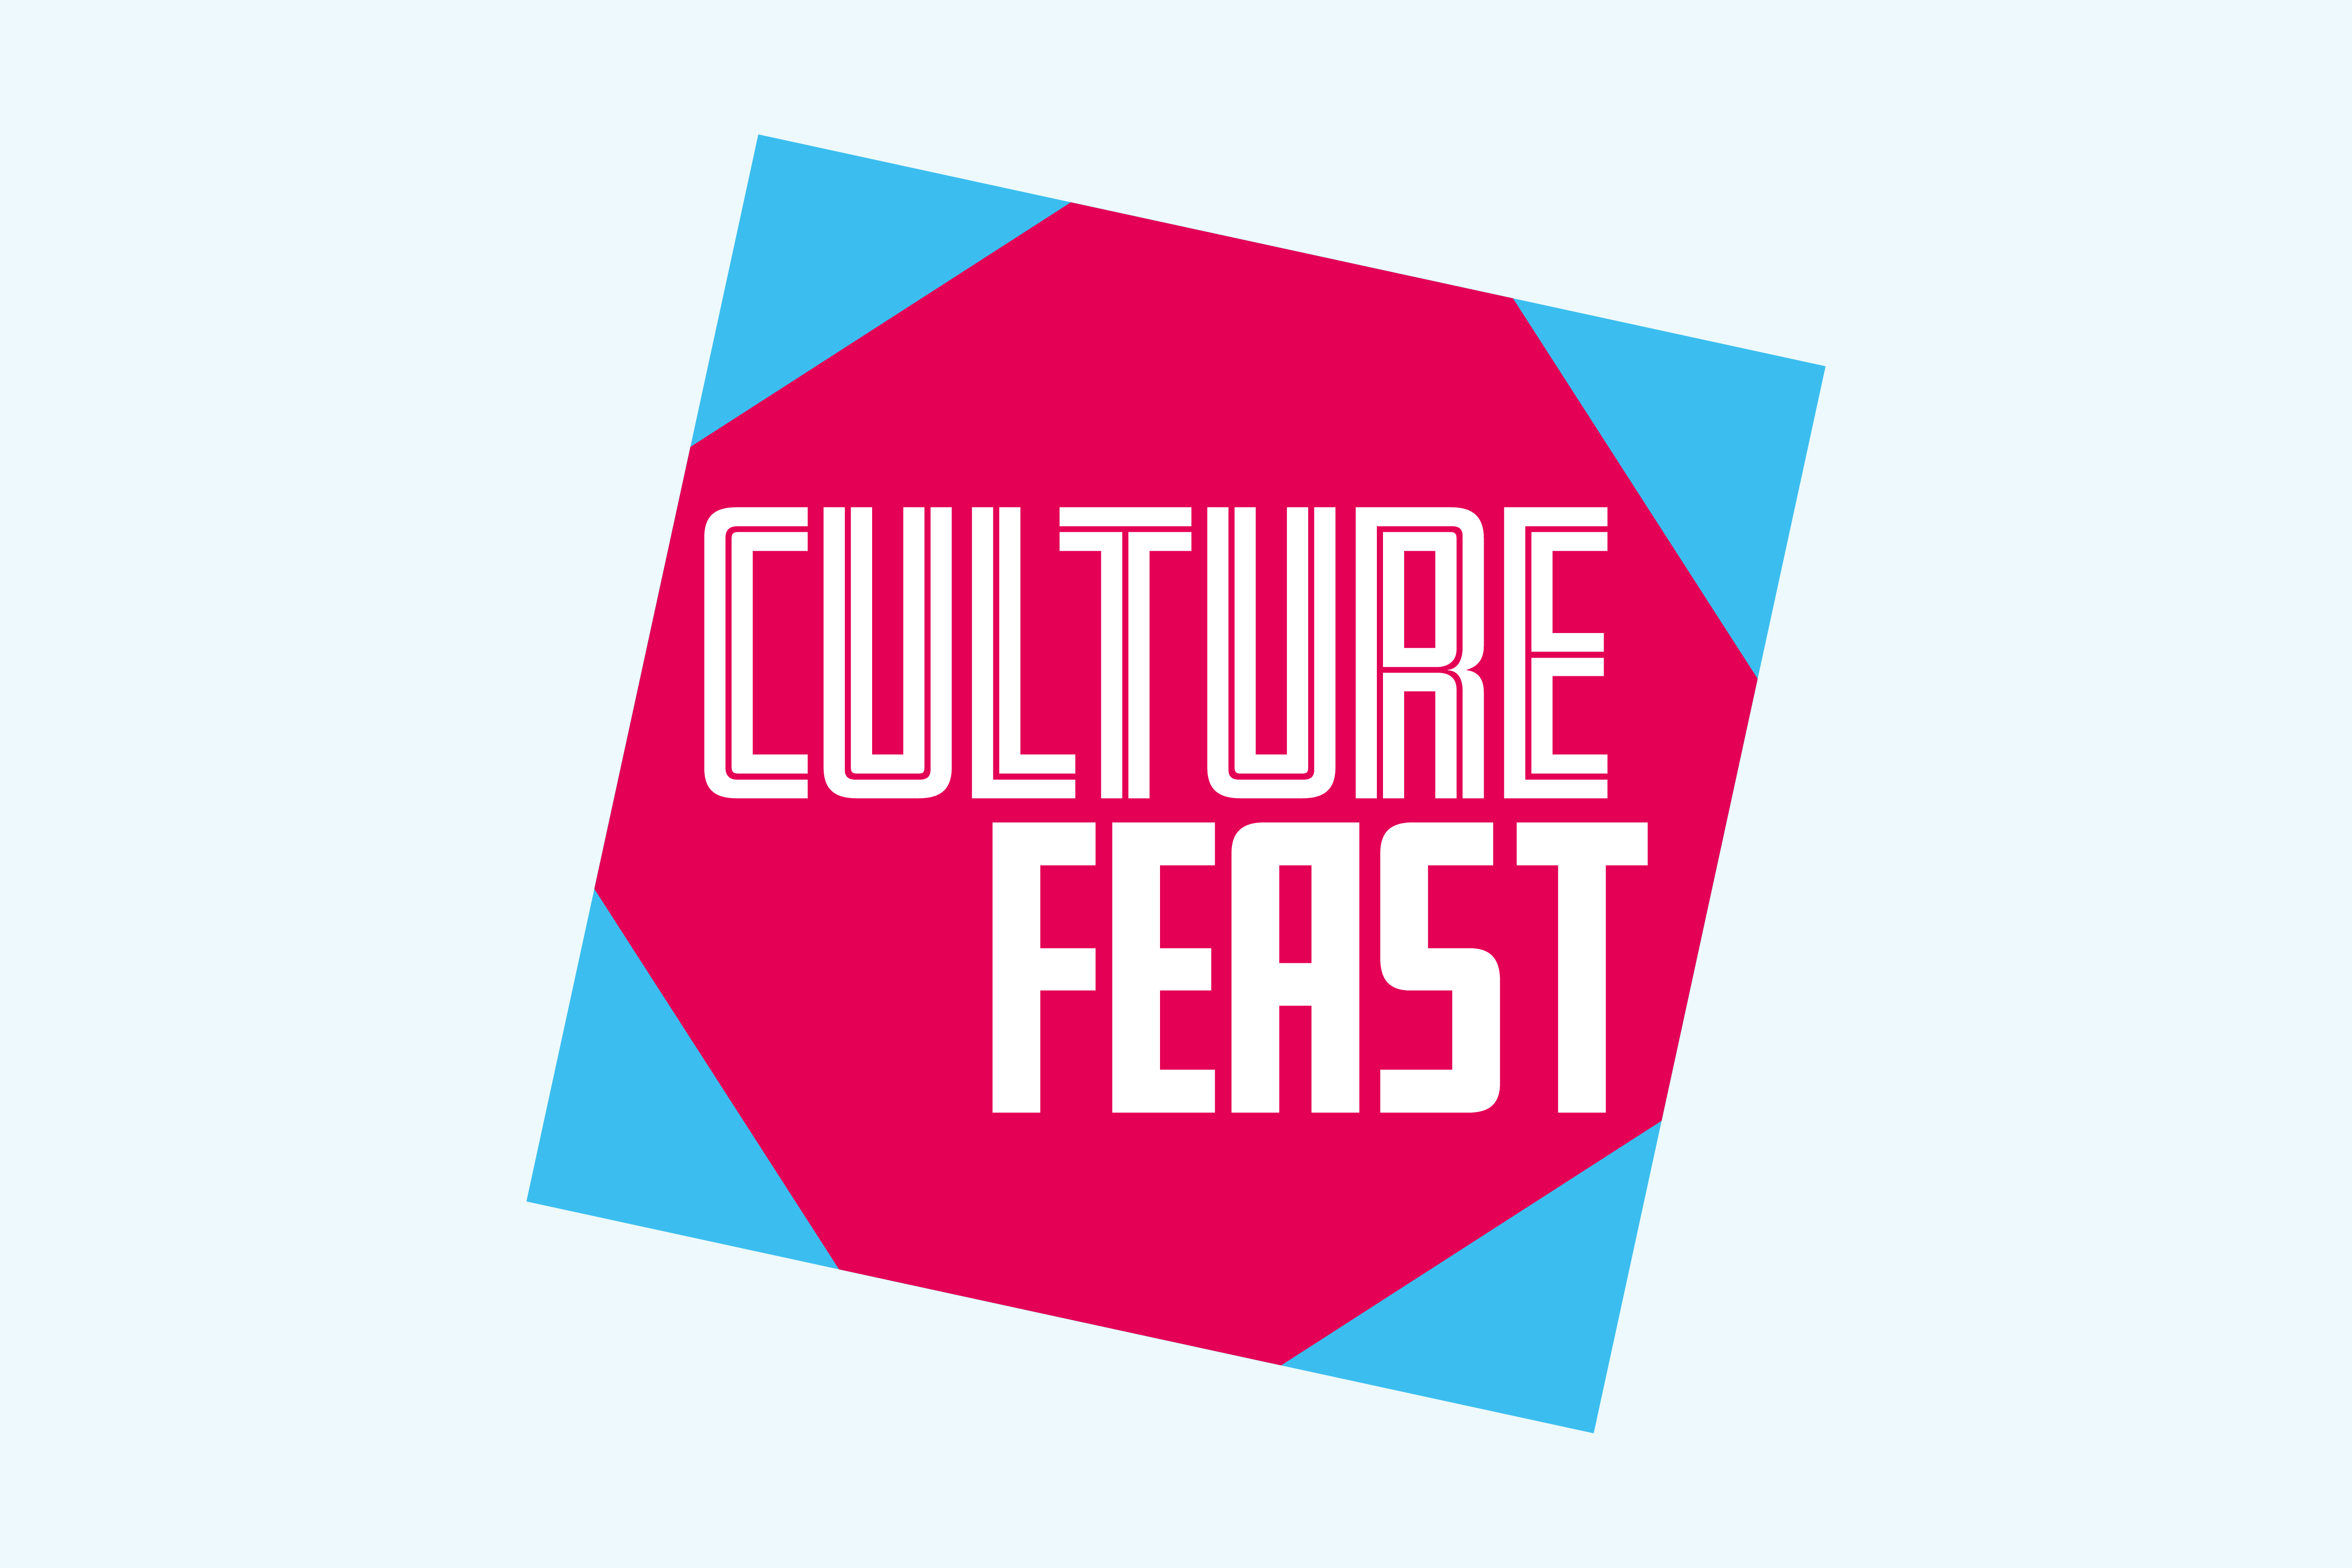 Culture Feast brand identity